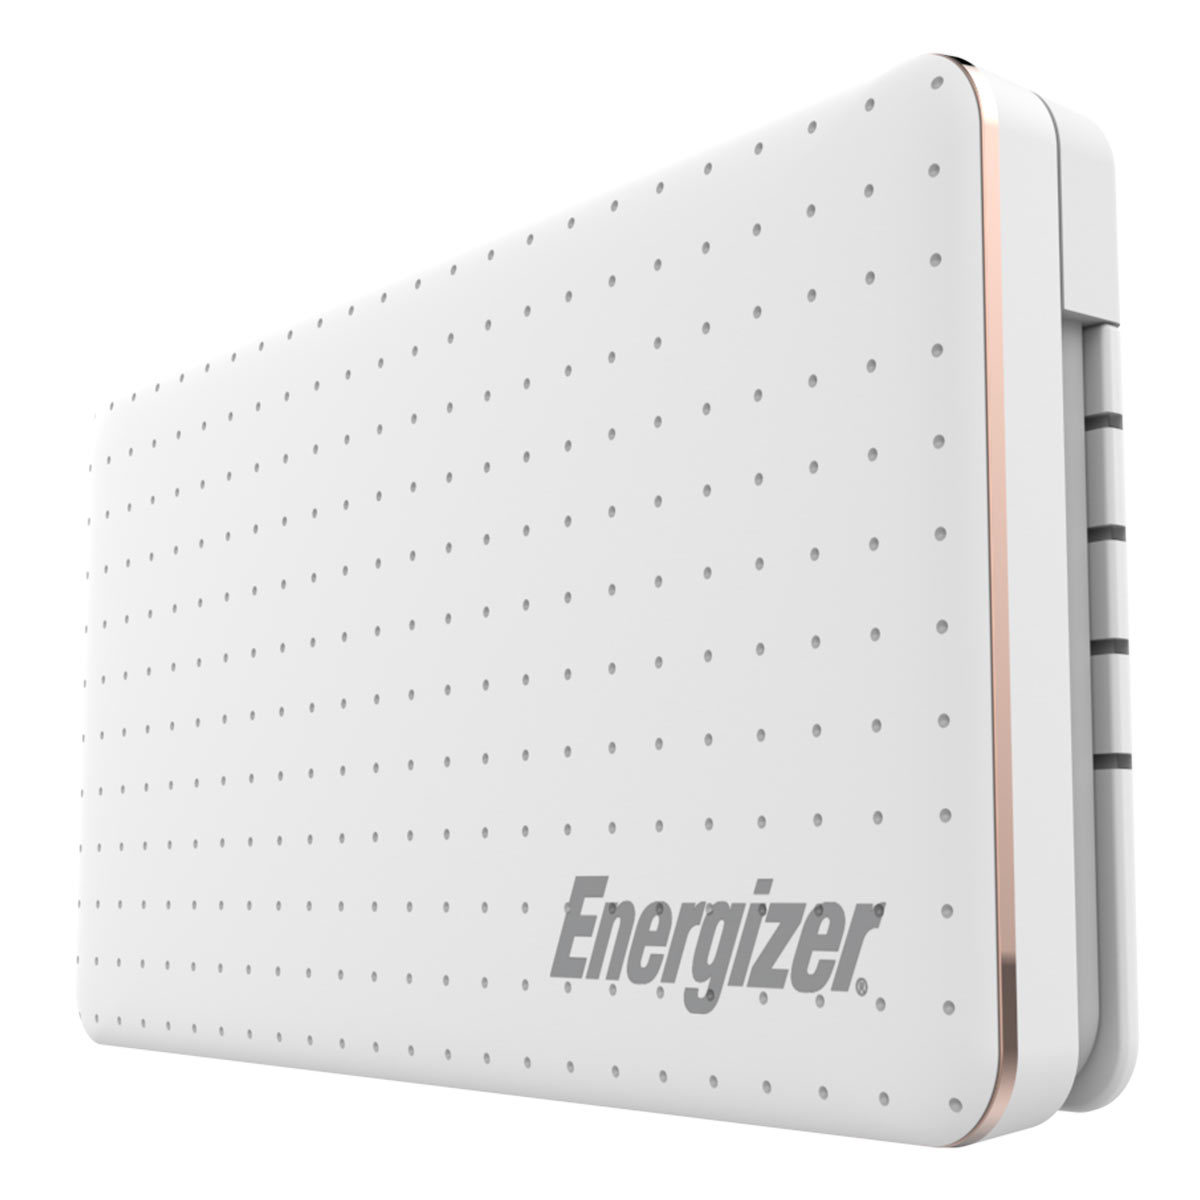 Energizer XP10002CQ_WE, 10000mAh Power Bank in White